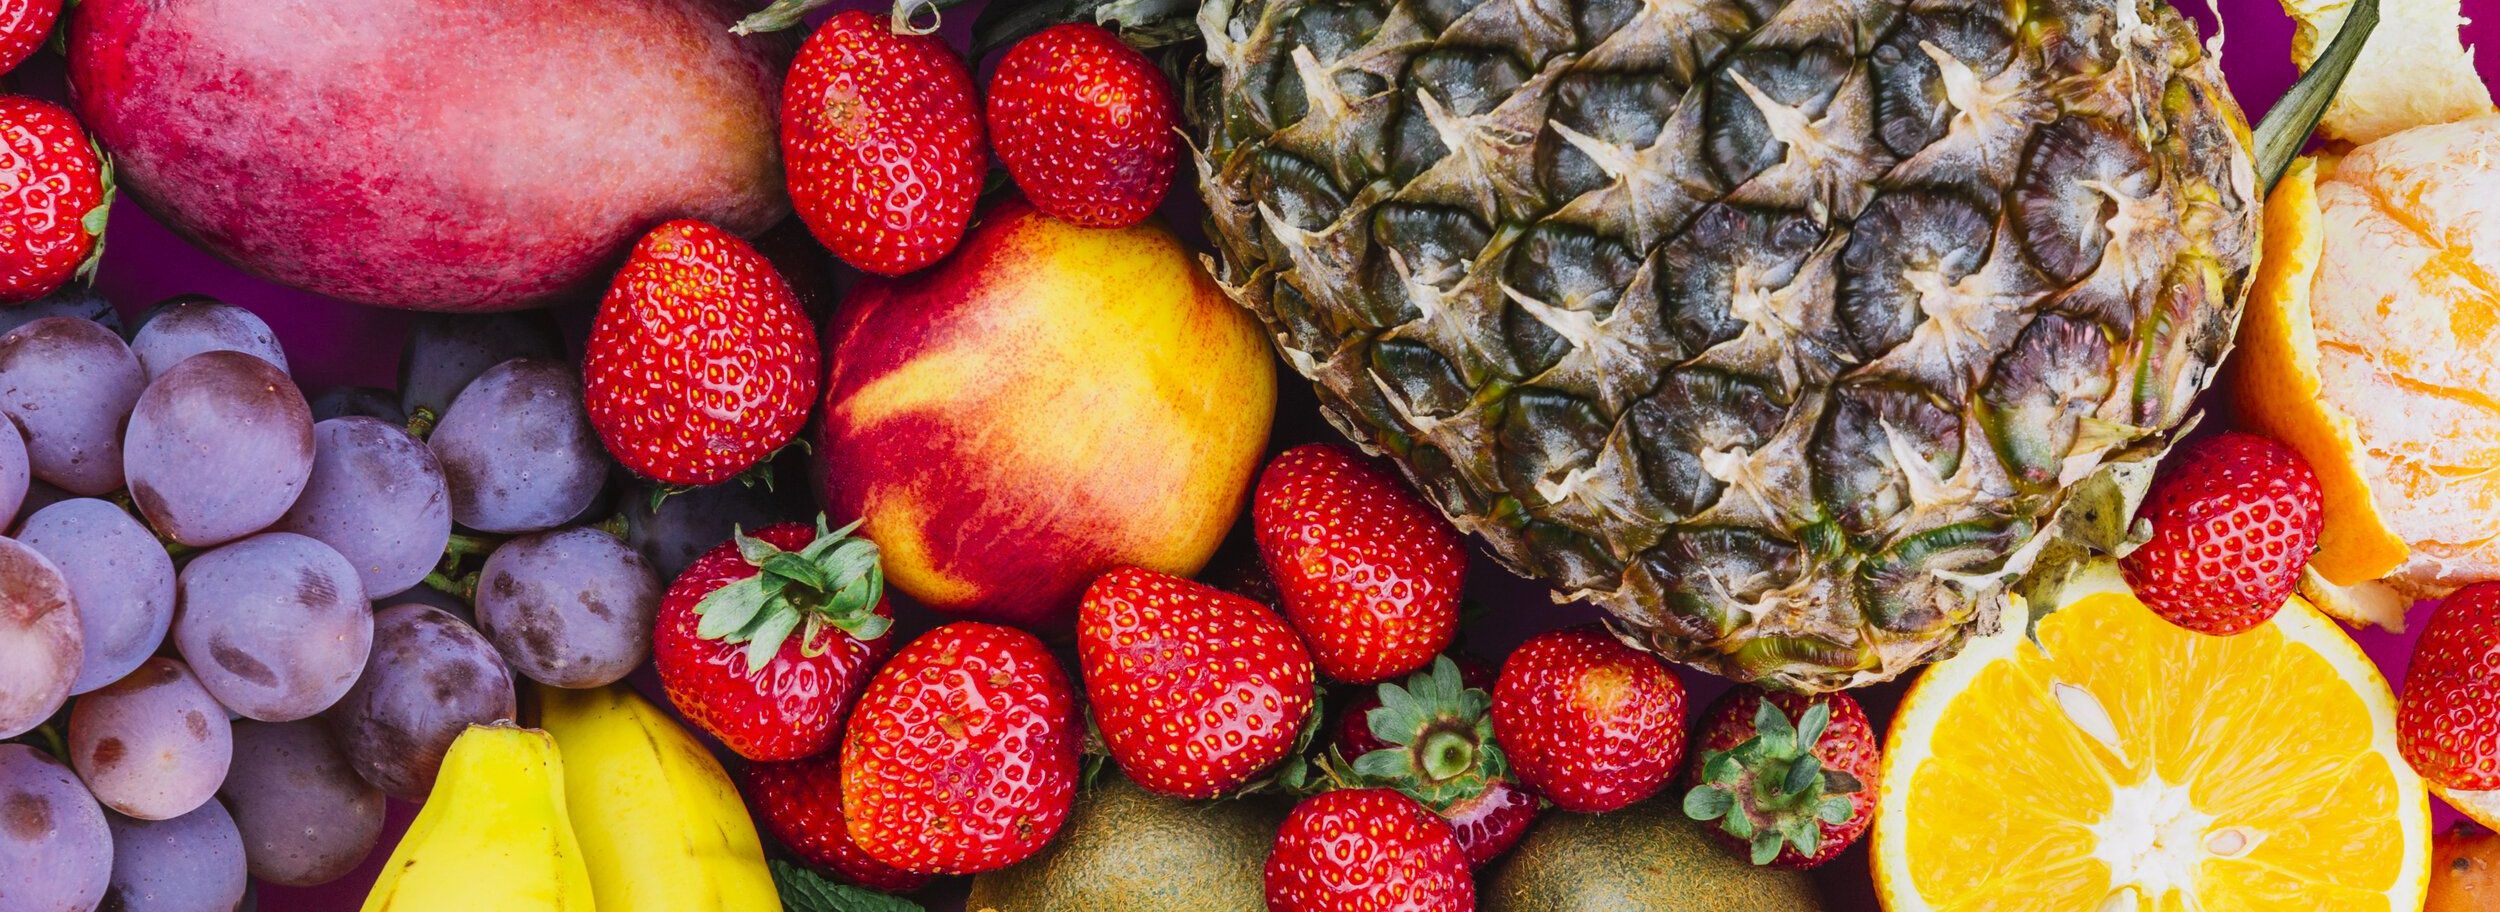 grapes-strawberries-pineapple-kiwi-apricot-banana-whole-pineapple